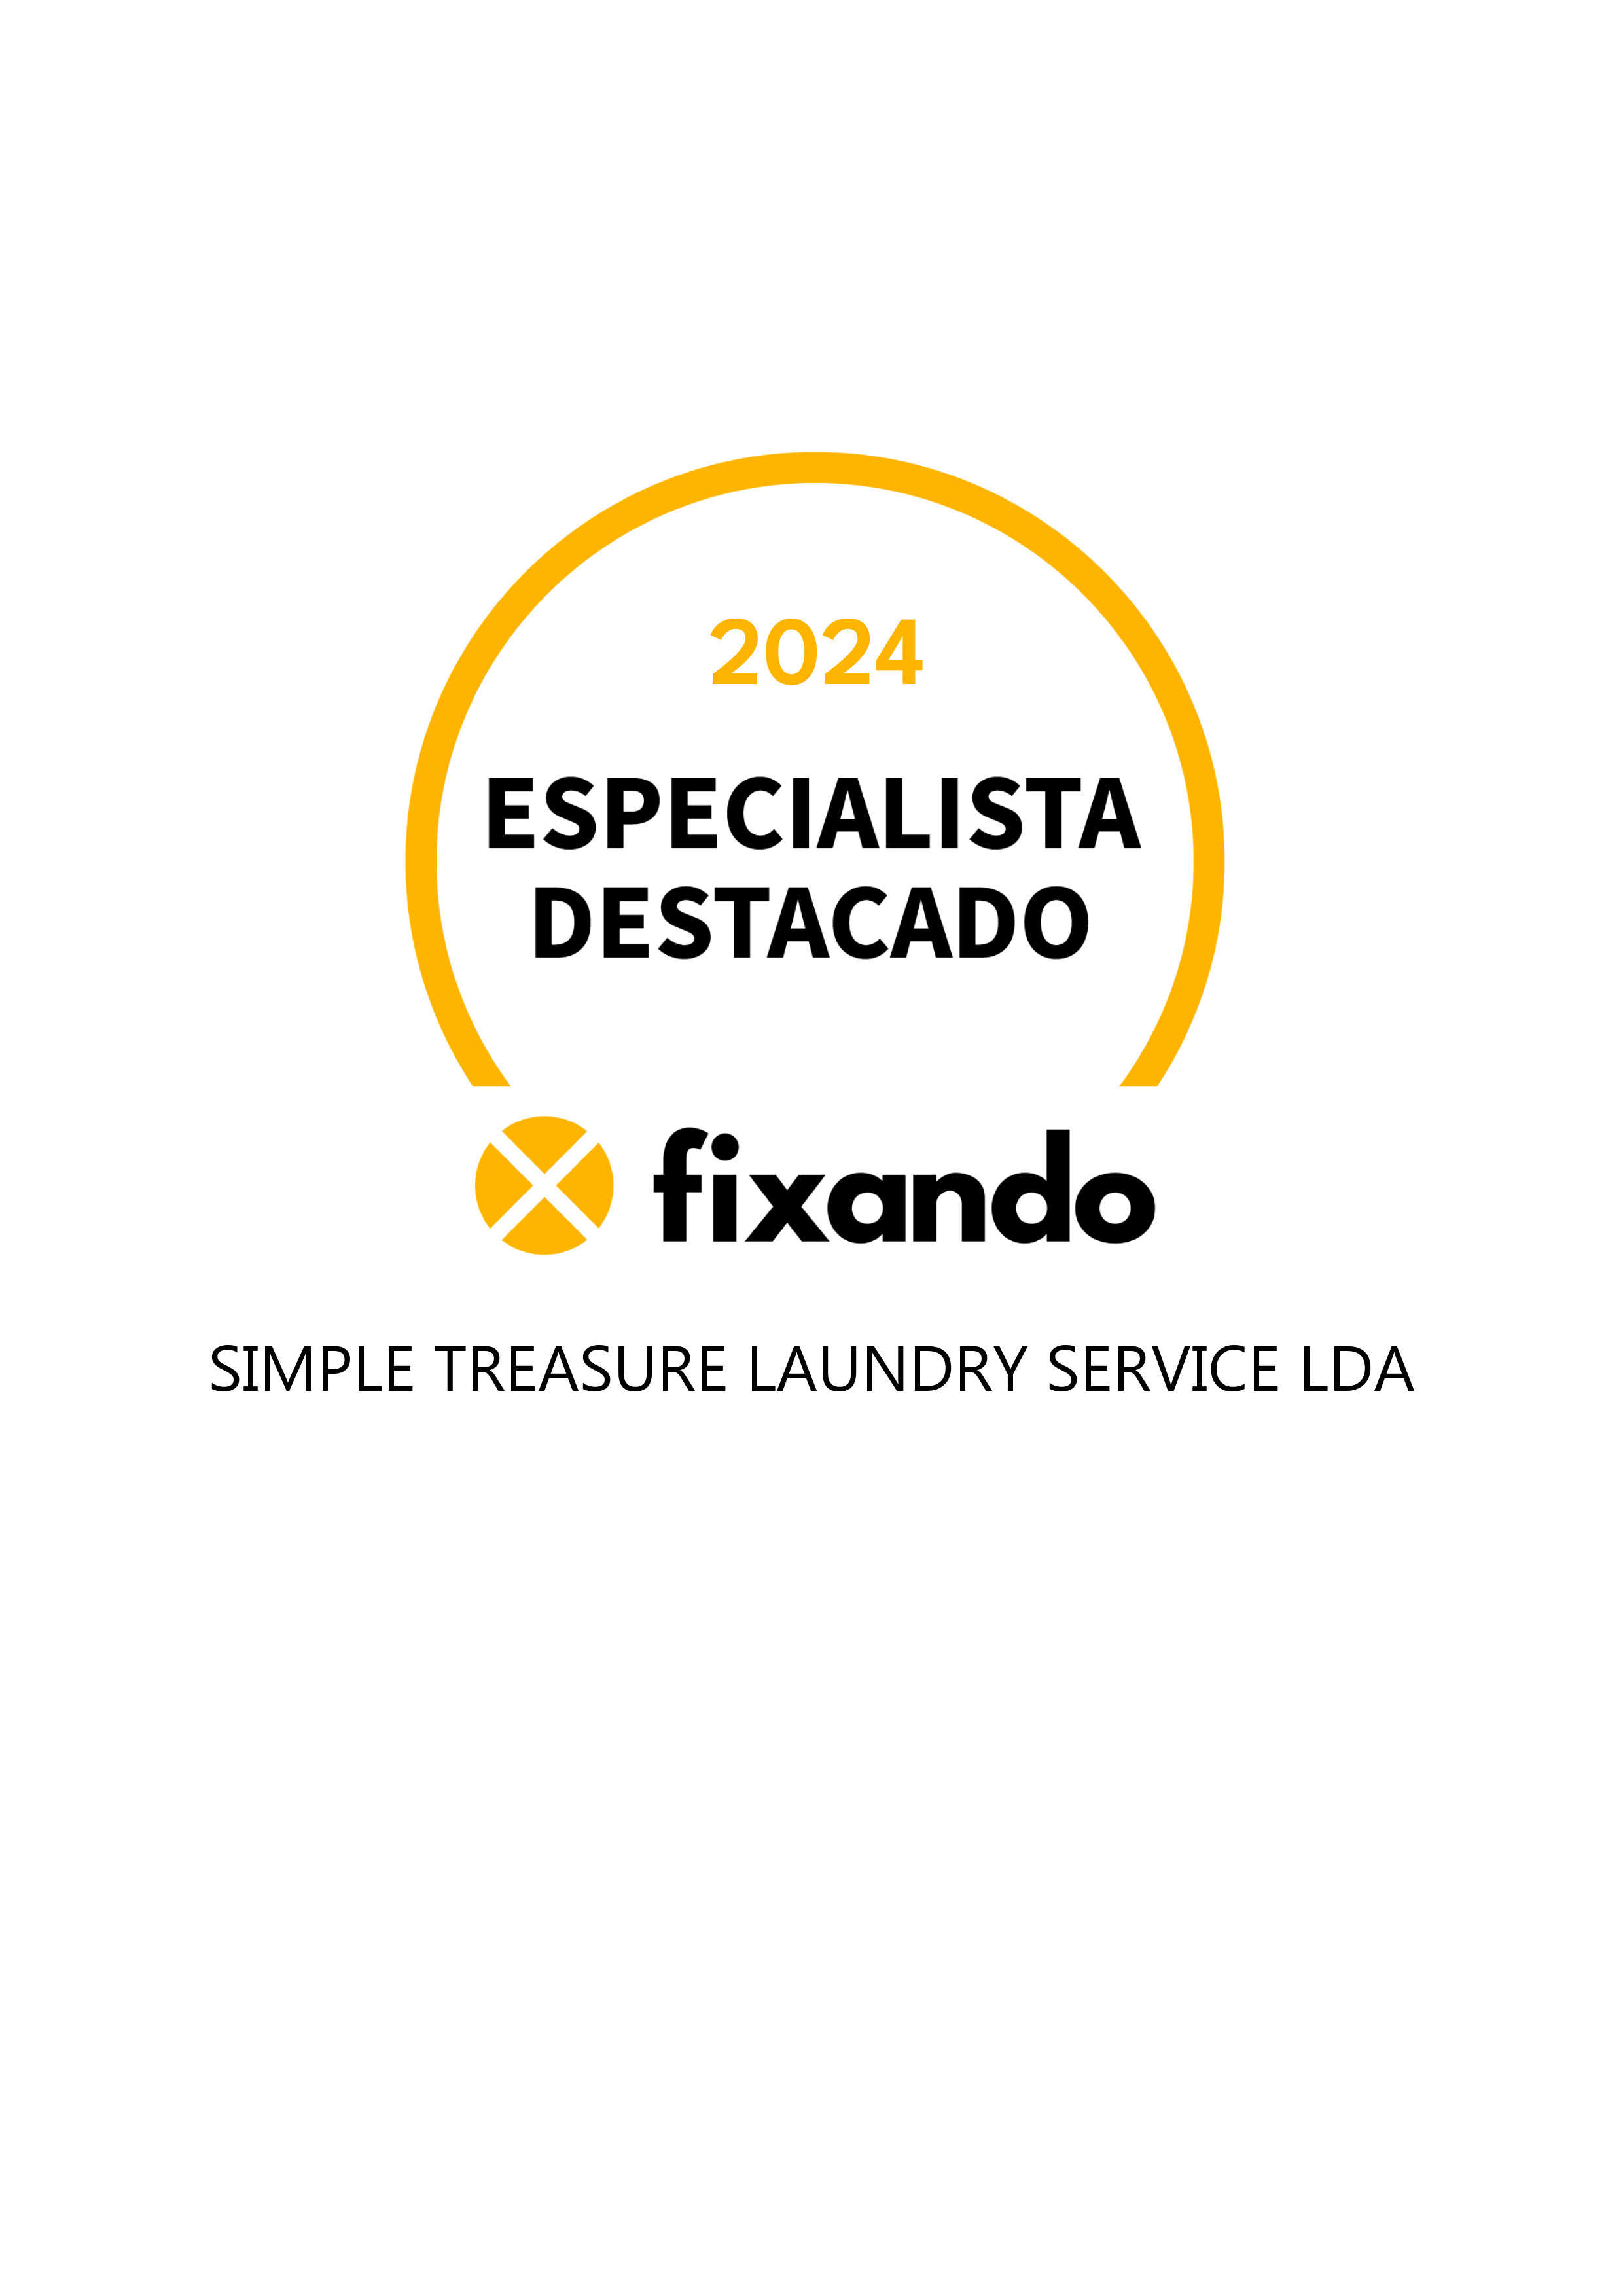 Simple Treasure Laundry Service Lda - Vila Nova de Gaia - Lavagem de Roupa e Engomadoria